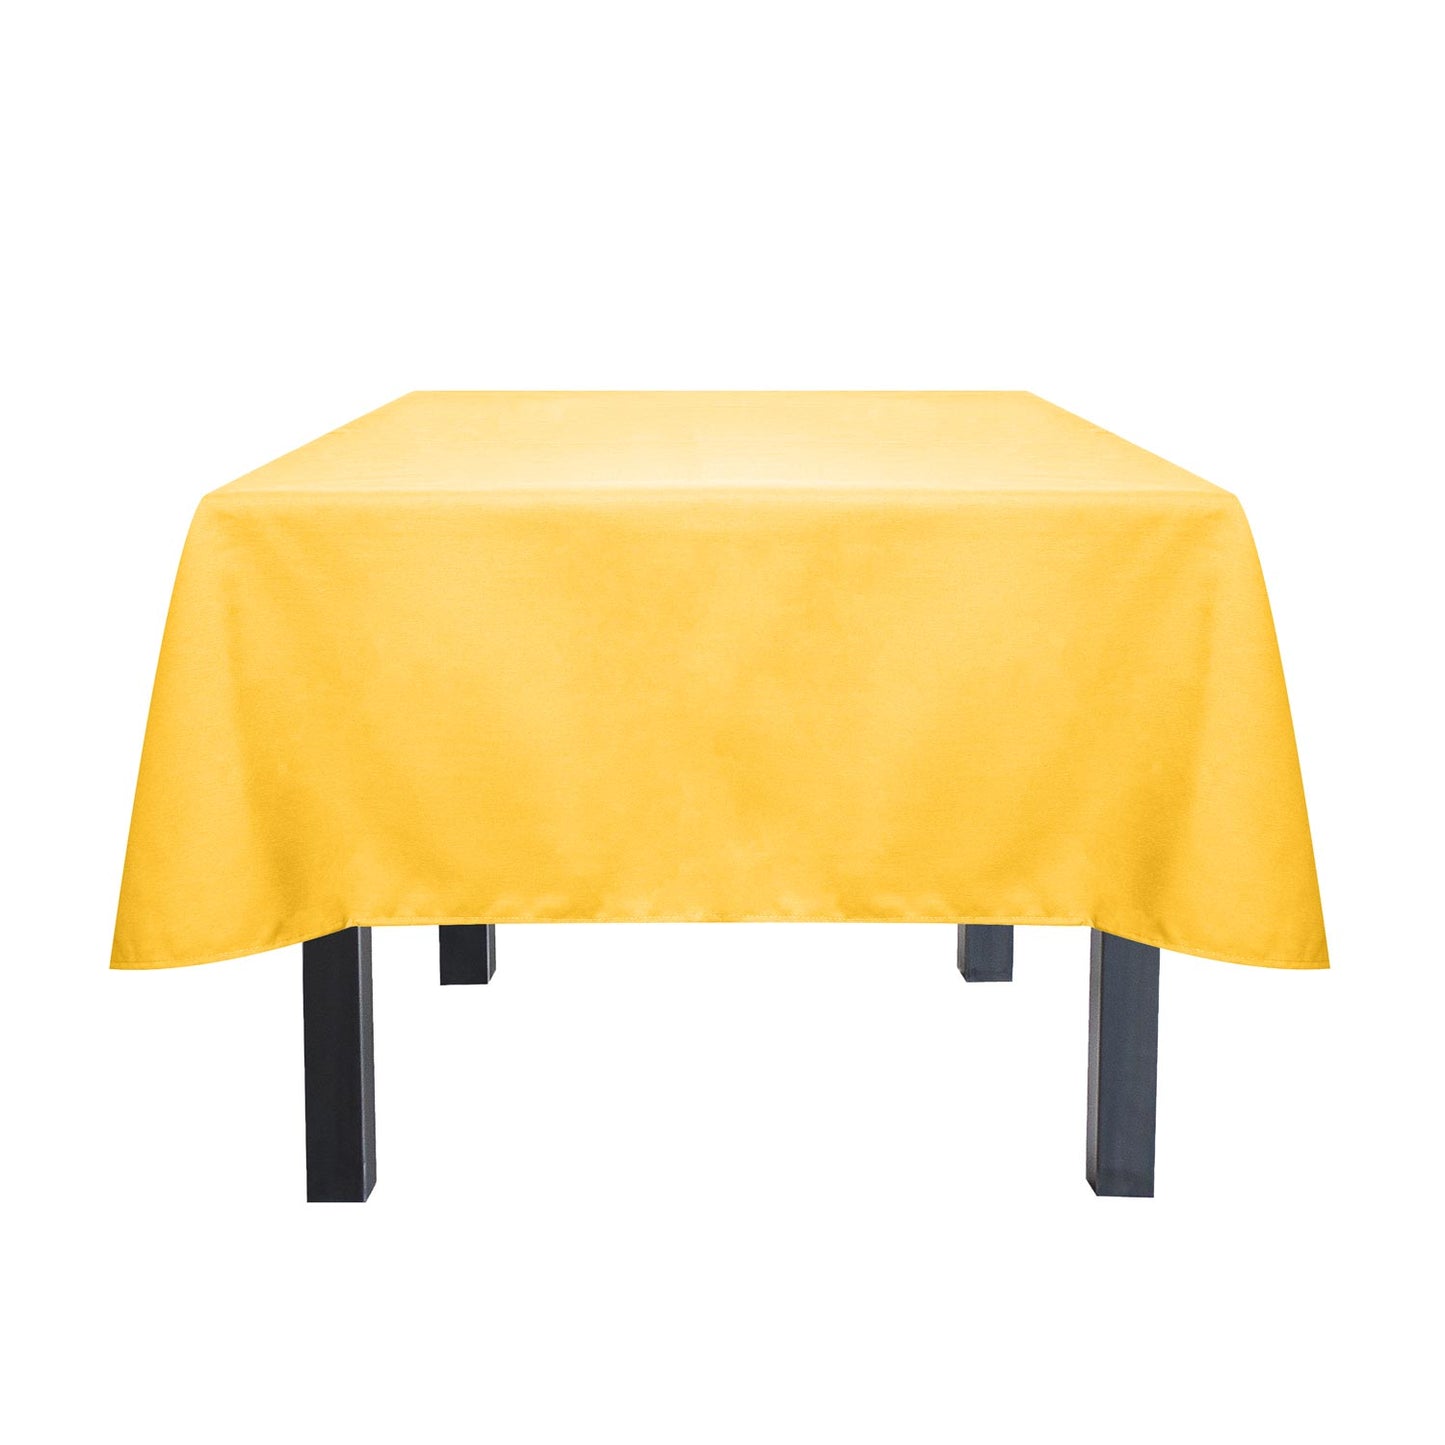 Milliken Signature Table Cloth, 62 x 62 inch, Square